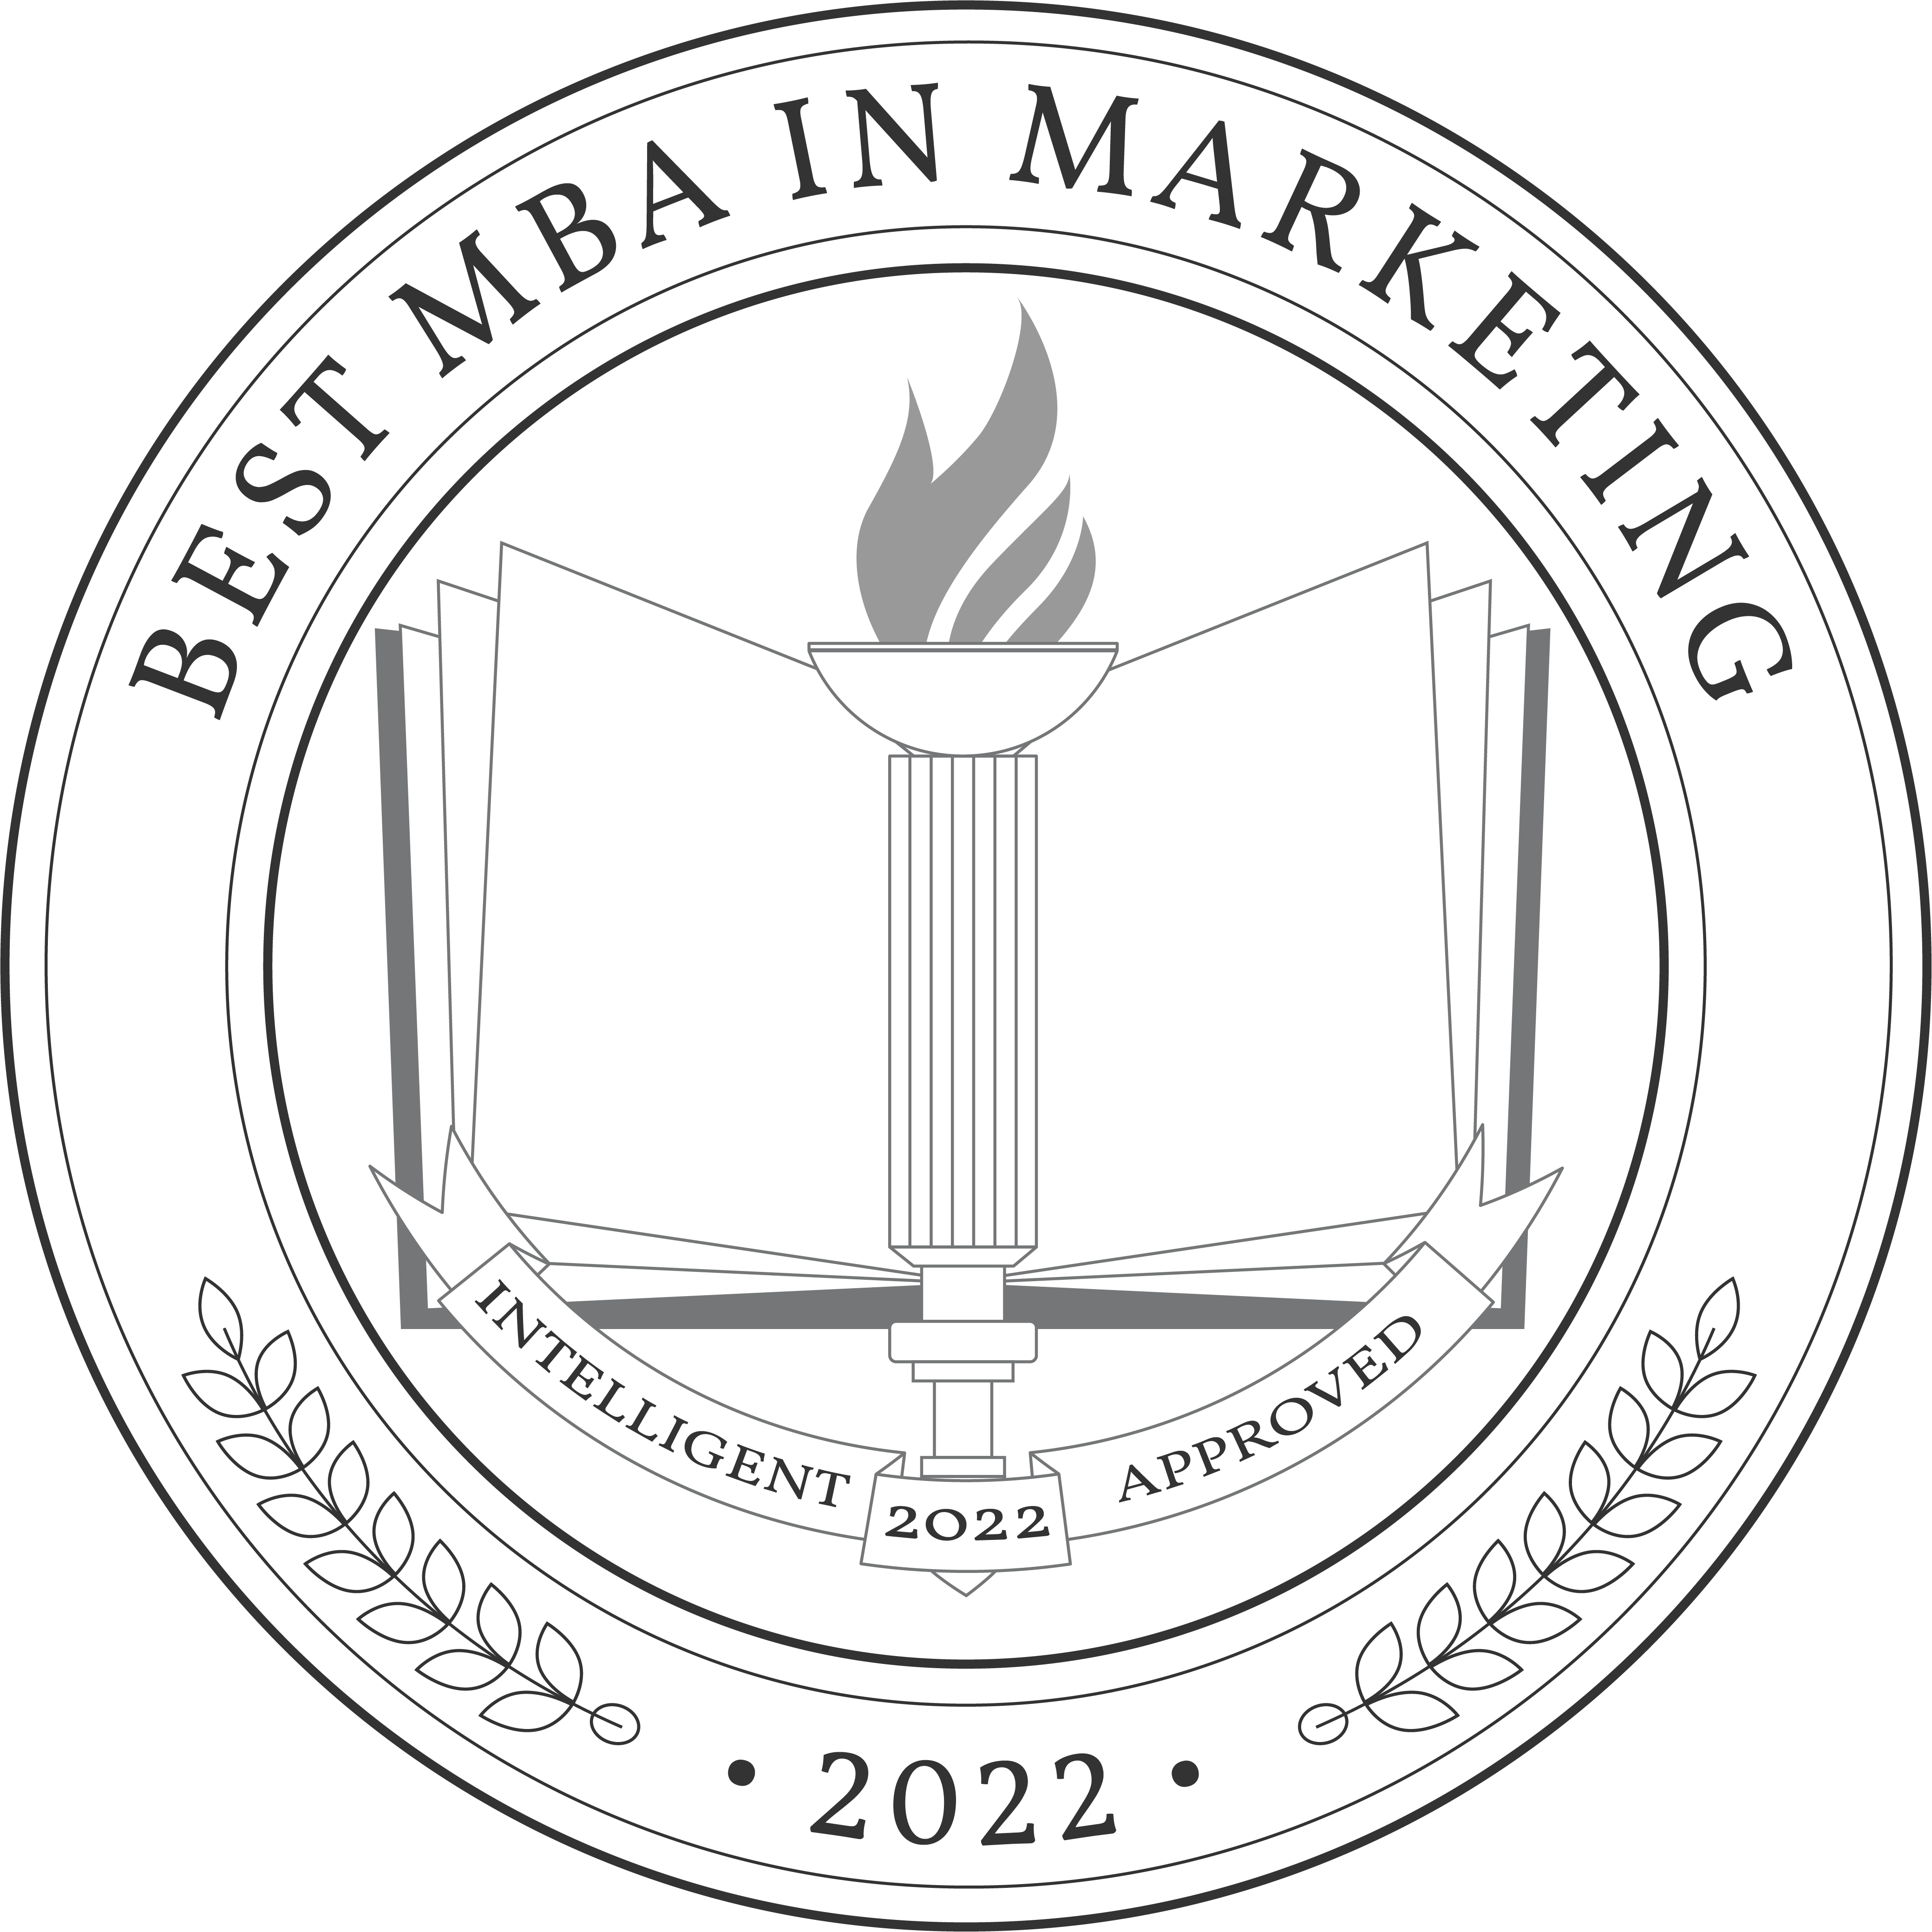 Best MBA in Marketing Degree Programs